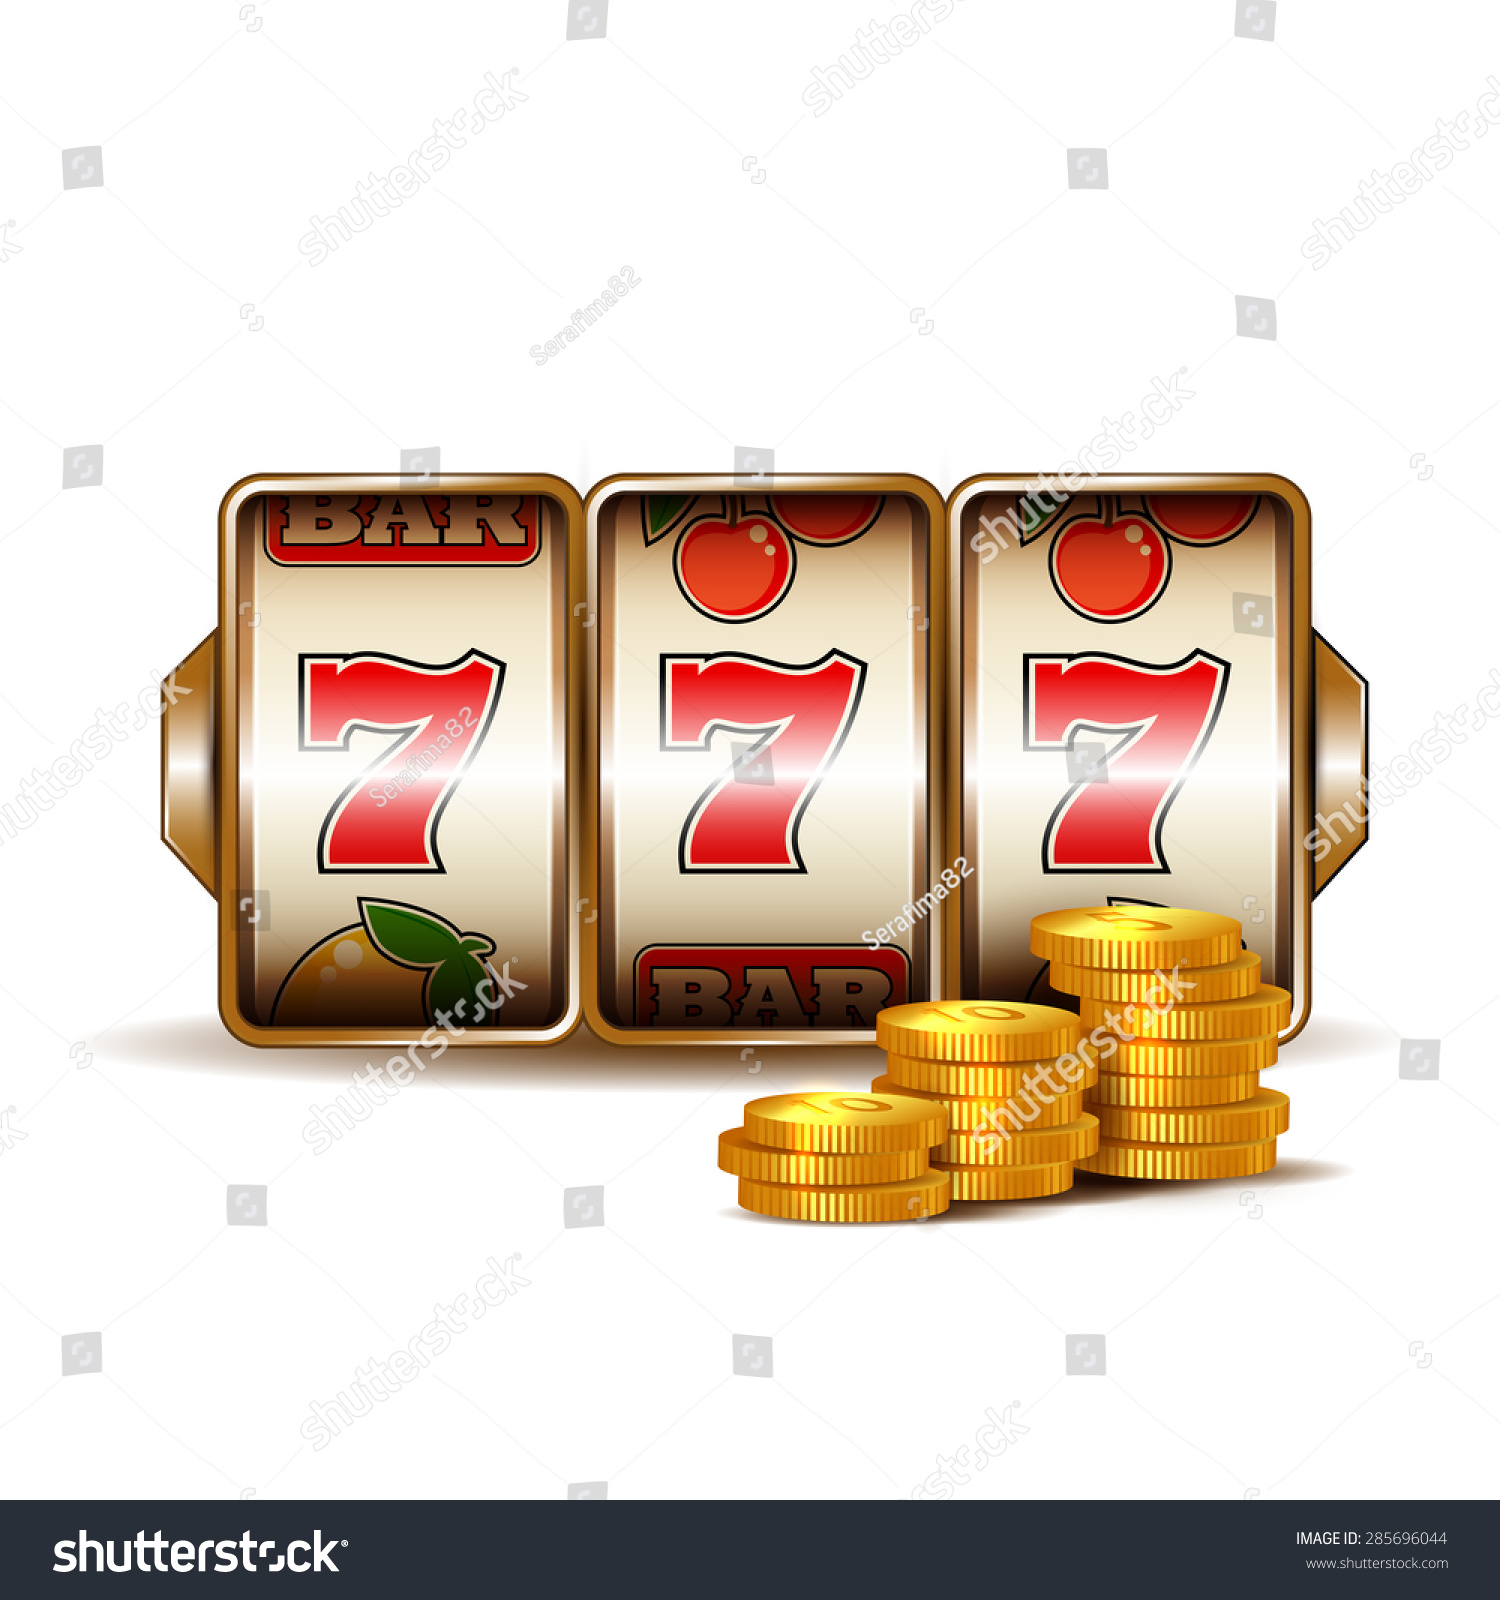 Casino Slot Machine With Coins. Stock Photo 285696044 : Shutterstock